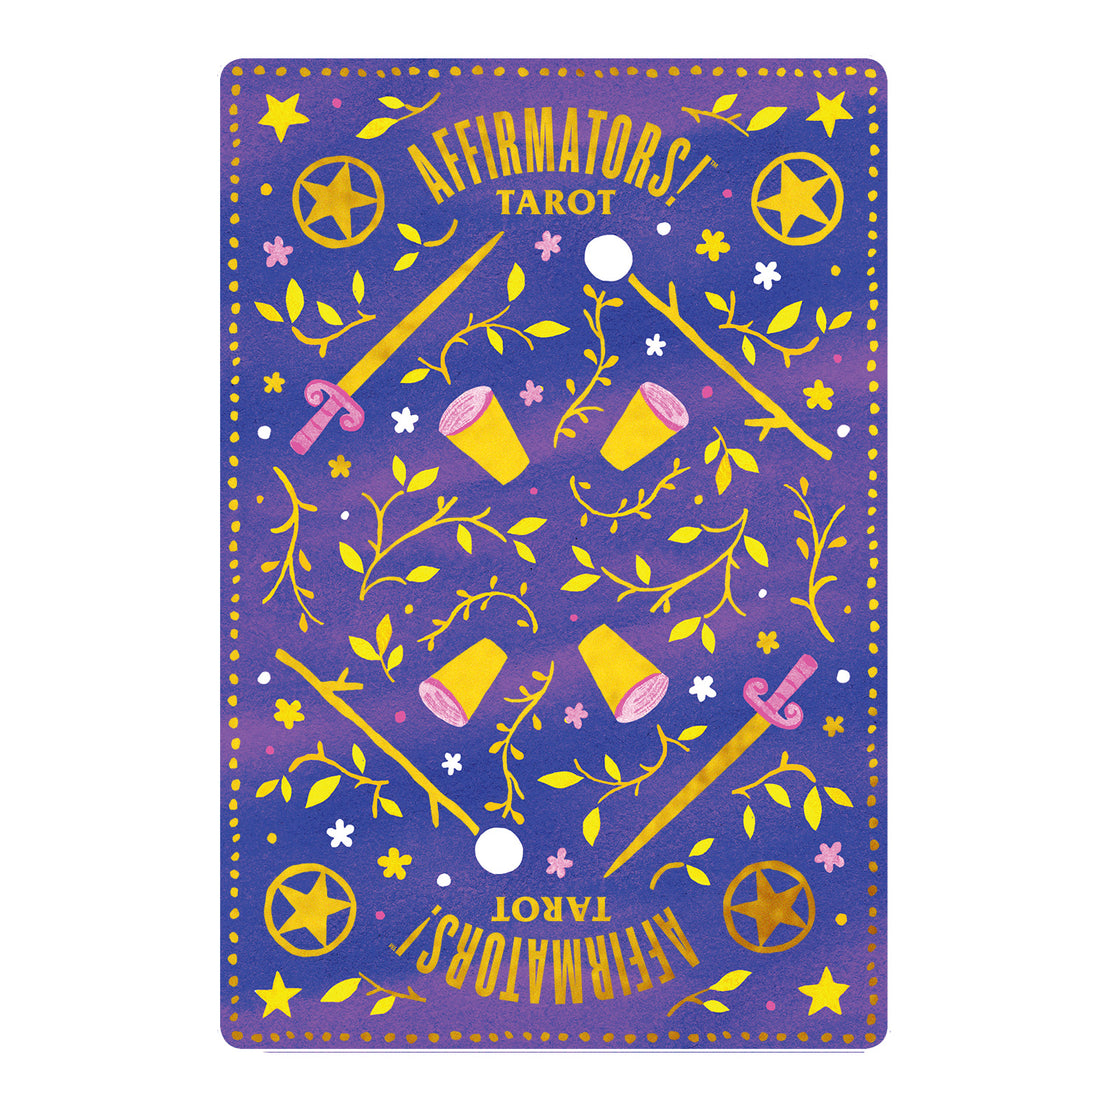 Affirmators! Tarot Card Deck